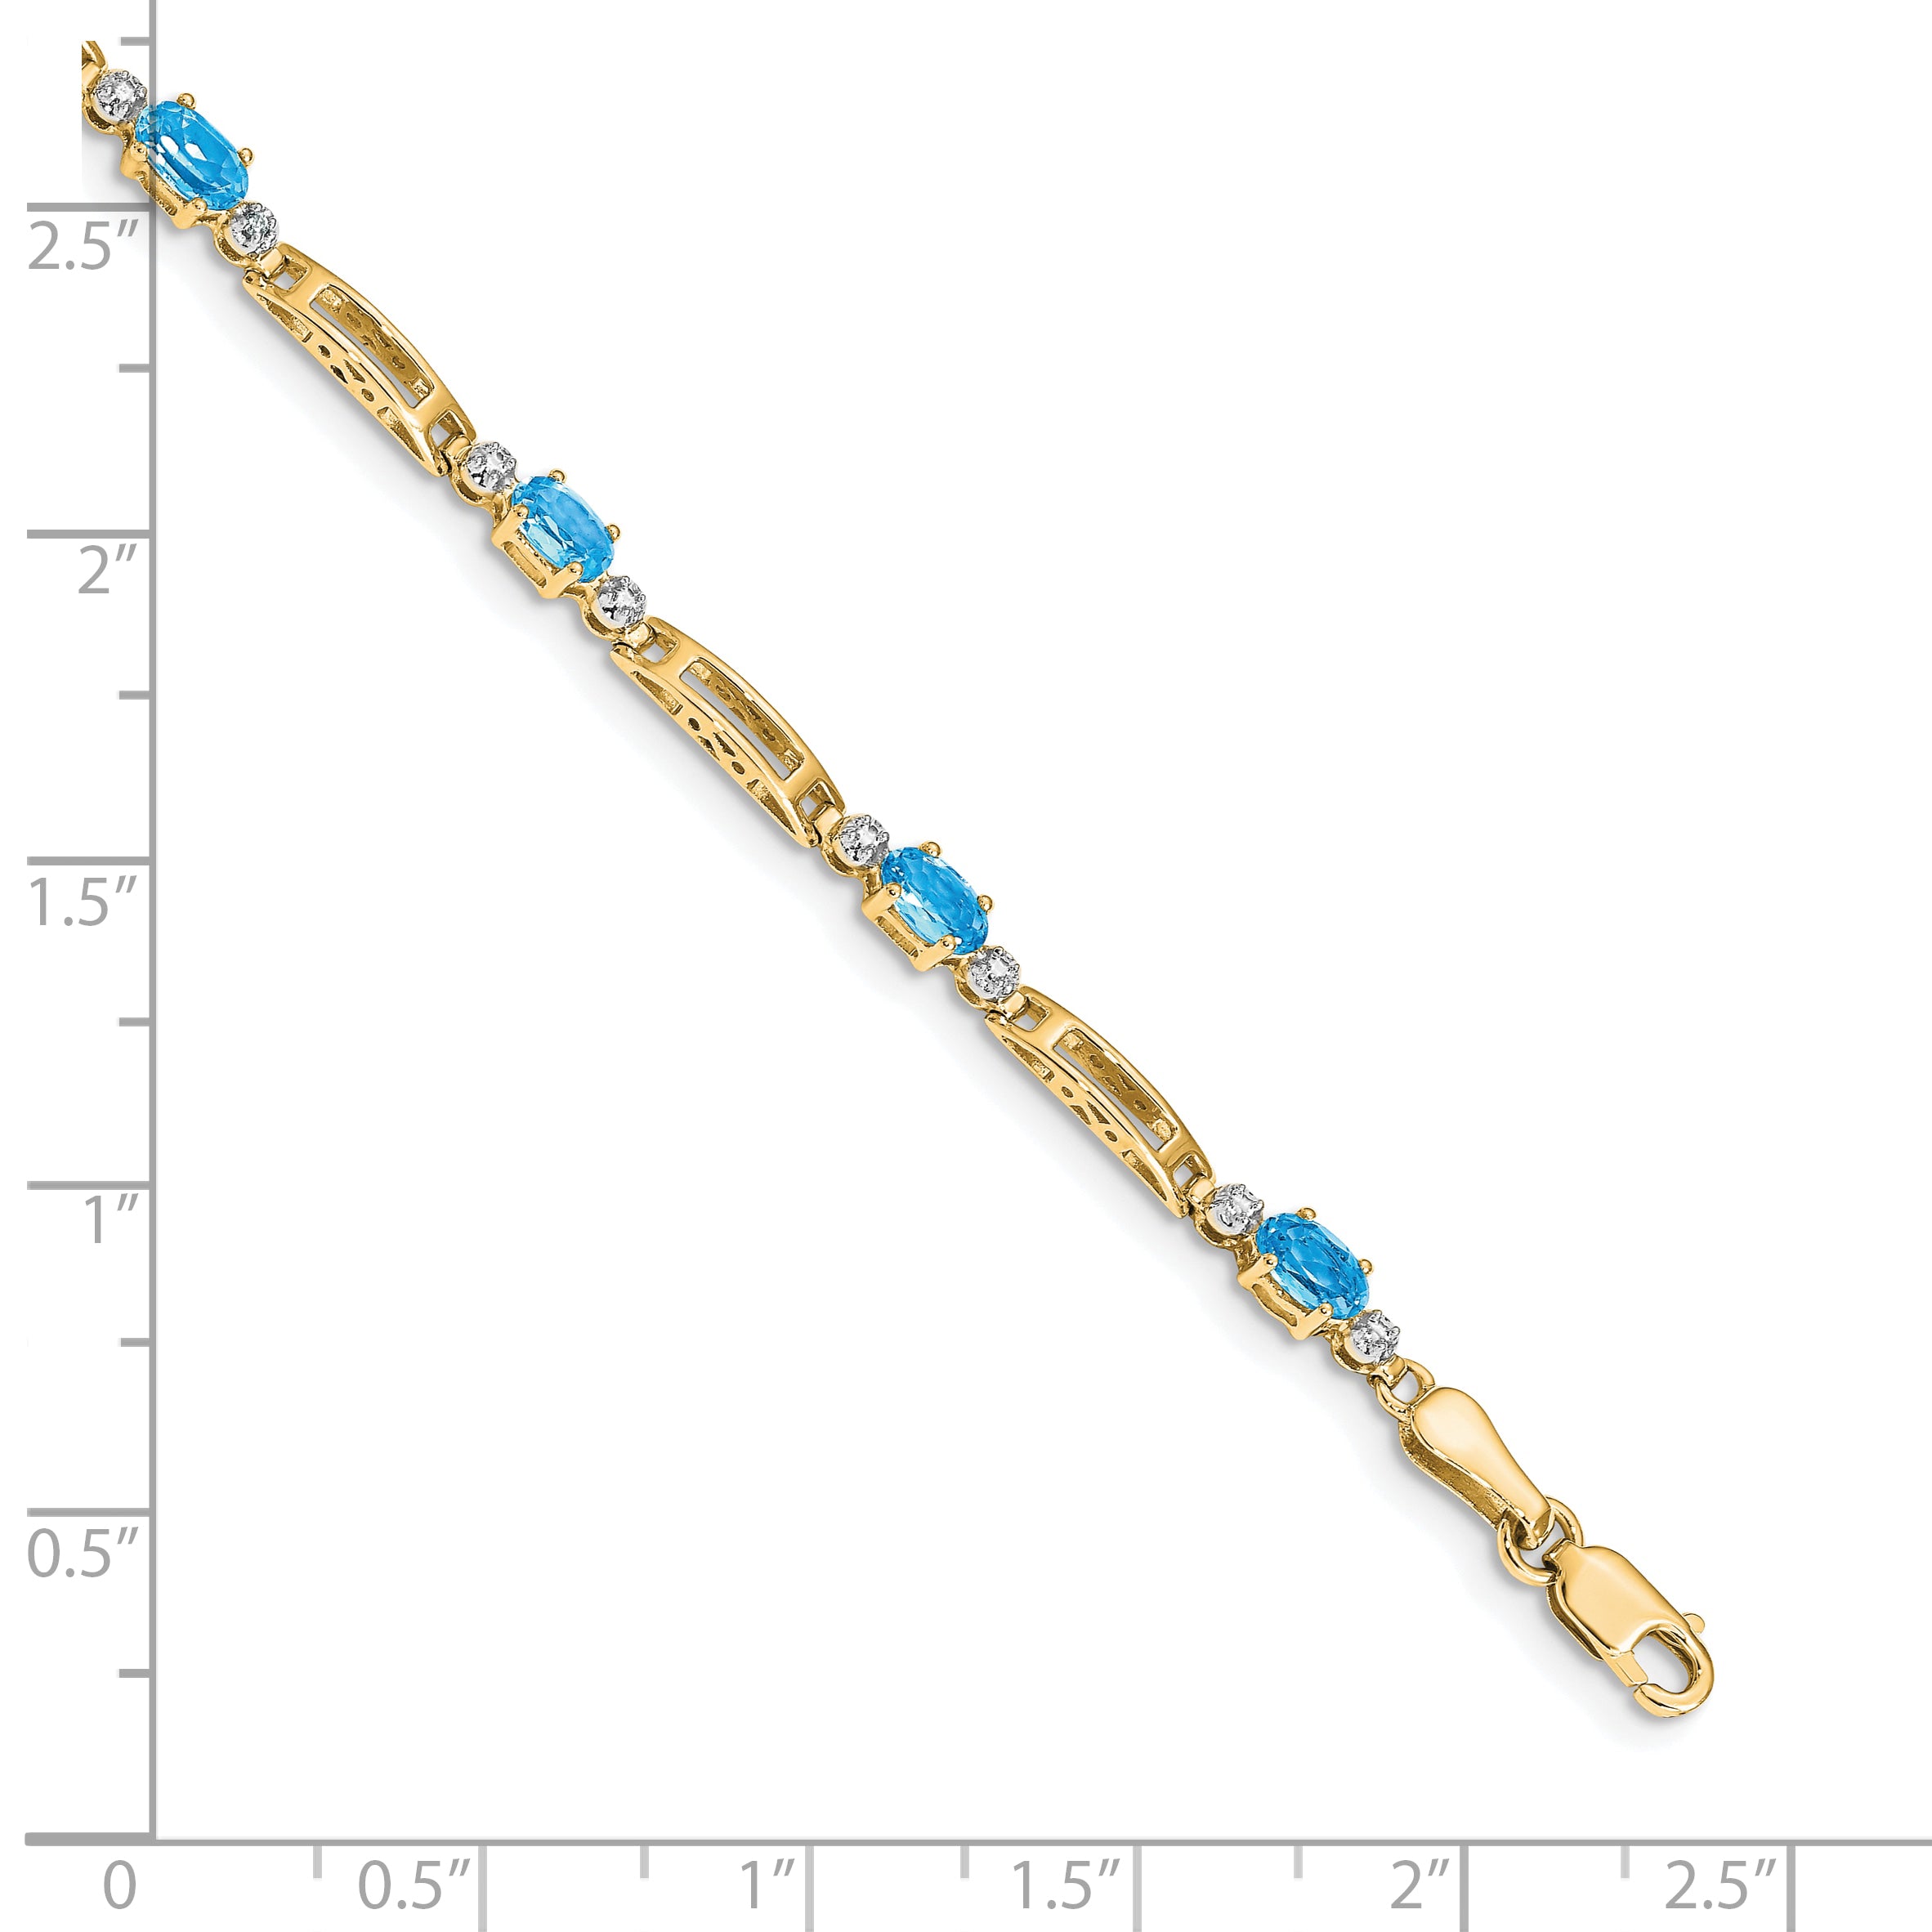 10k Diamond and Blue Topaz Bracelet